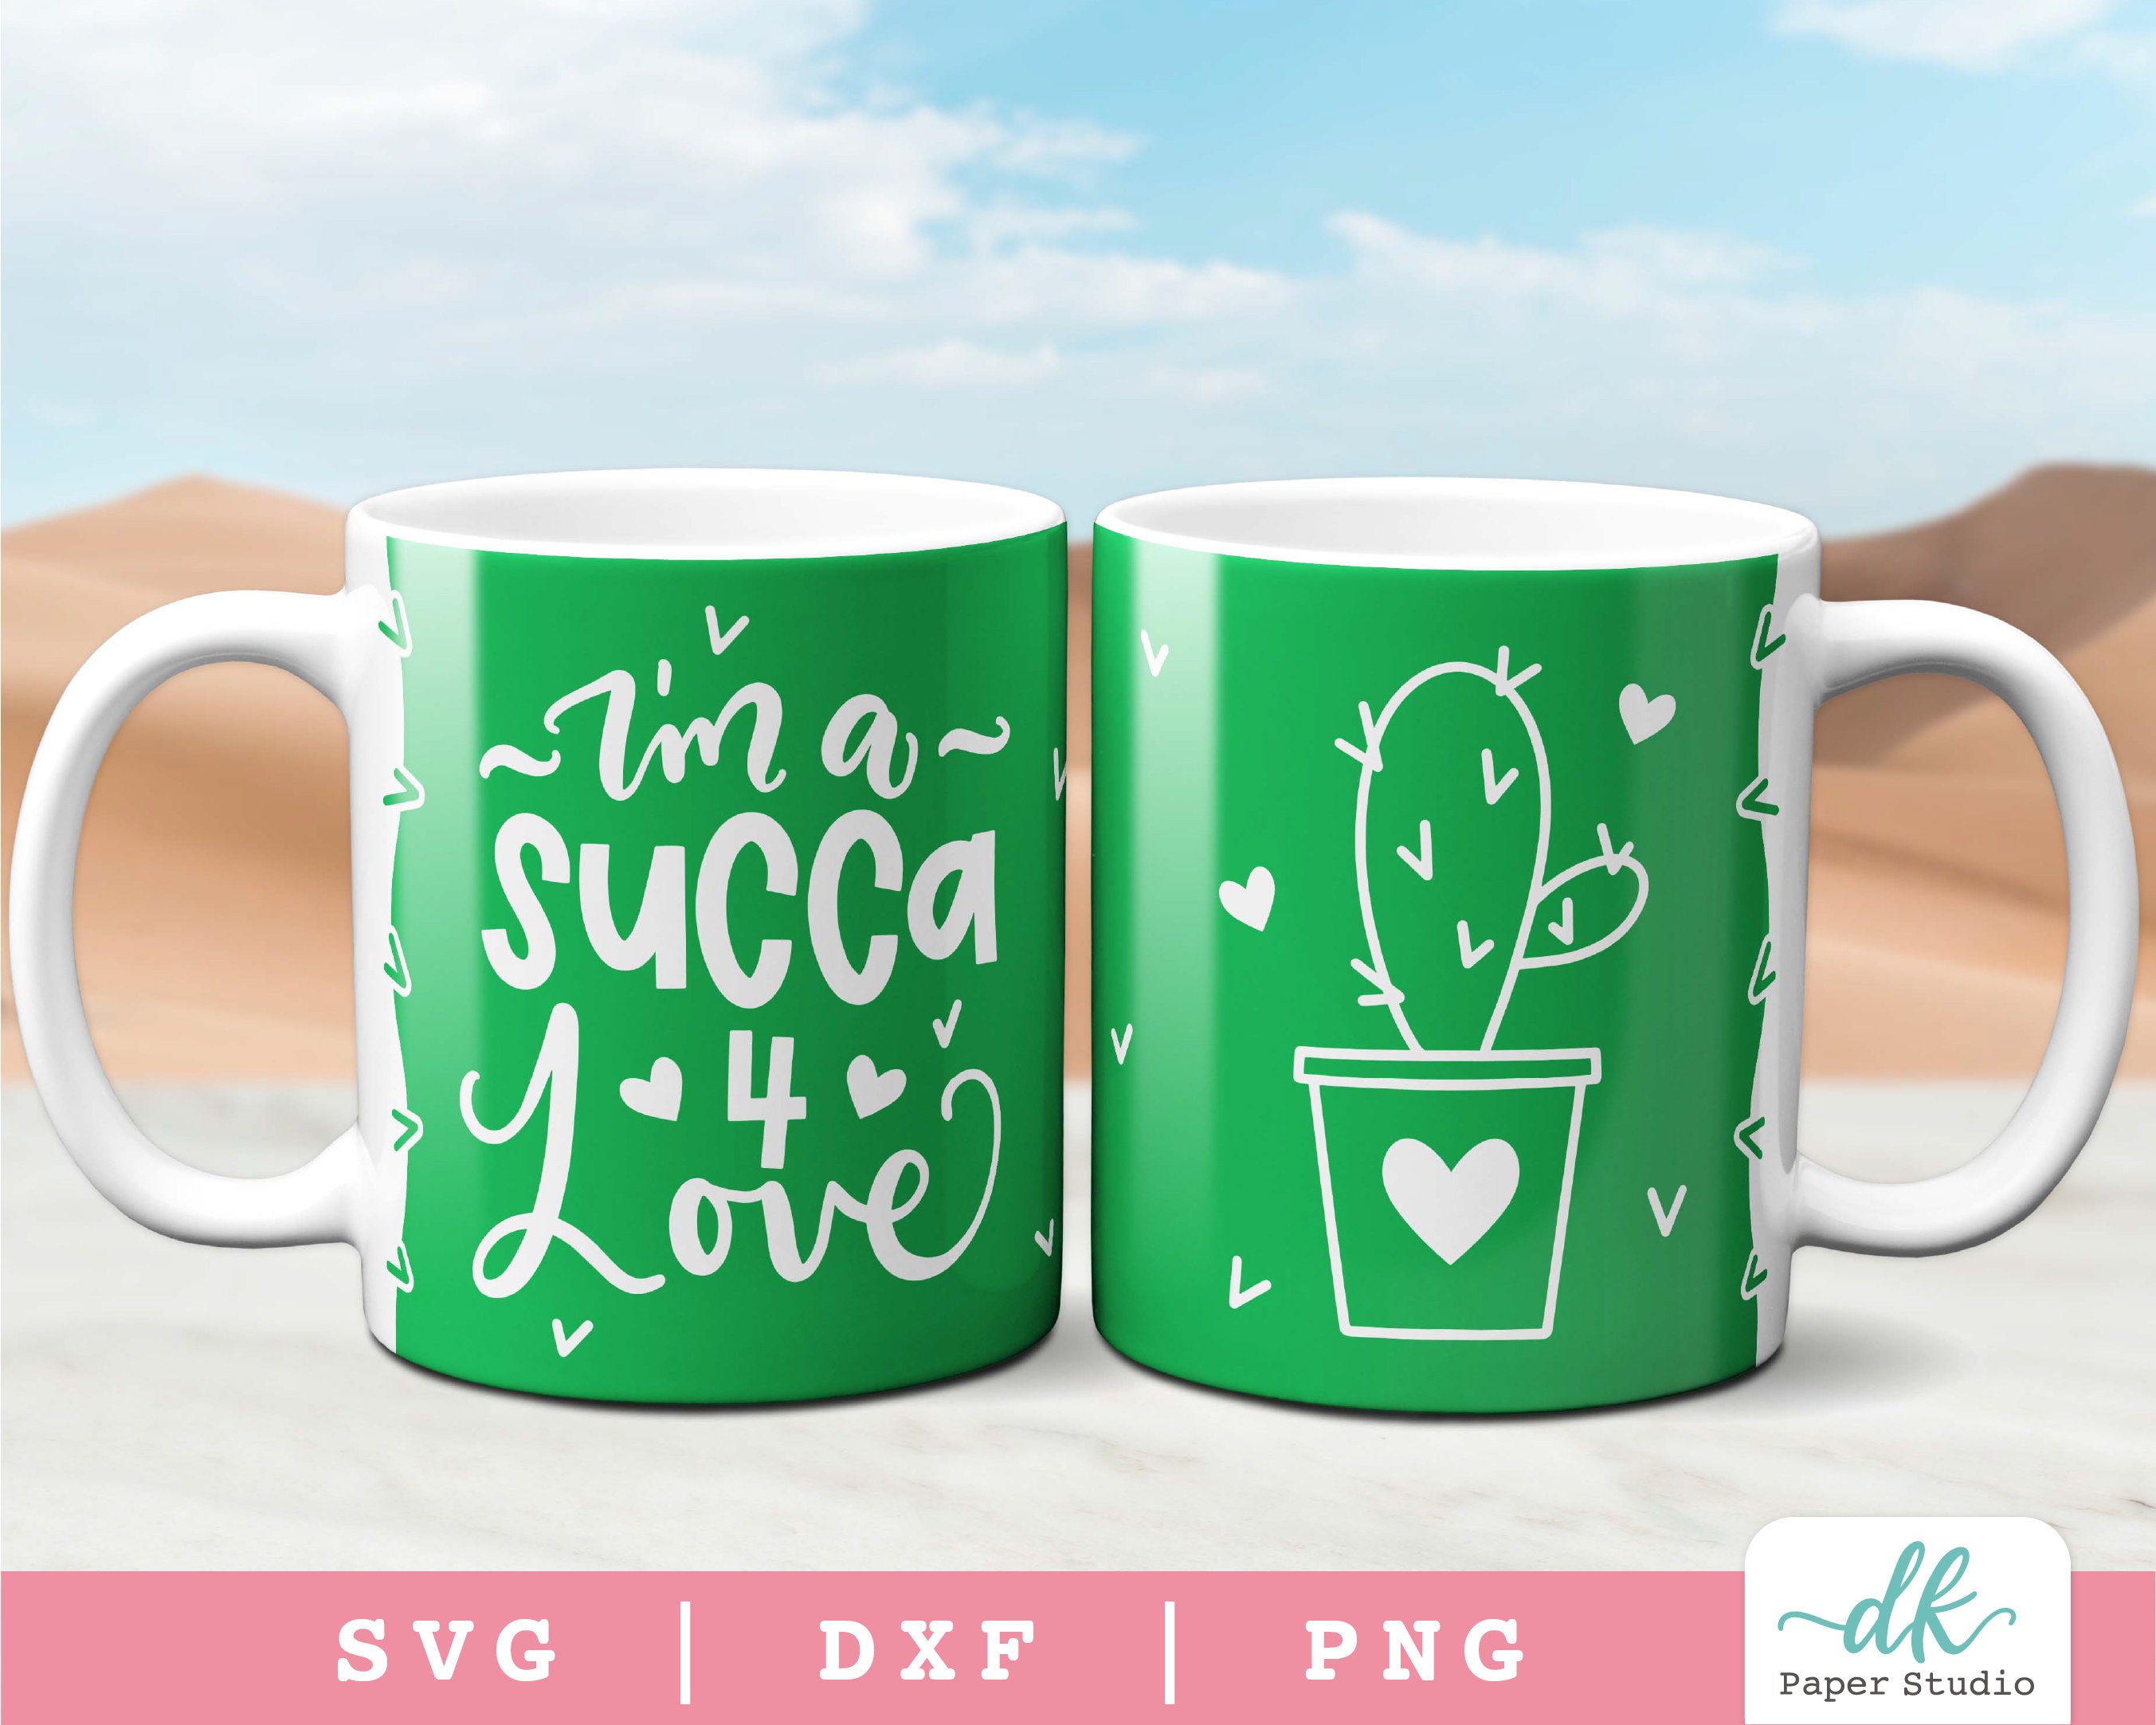 Coffee is my Valentine Cricut Mug Press SVG for Cricut Infusible Ink Sheet  — DK Paper Studio